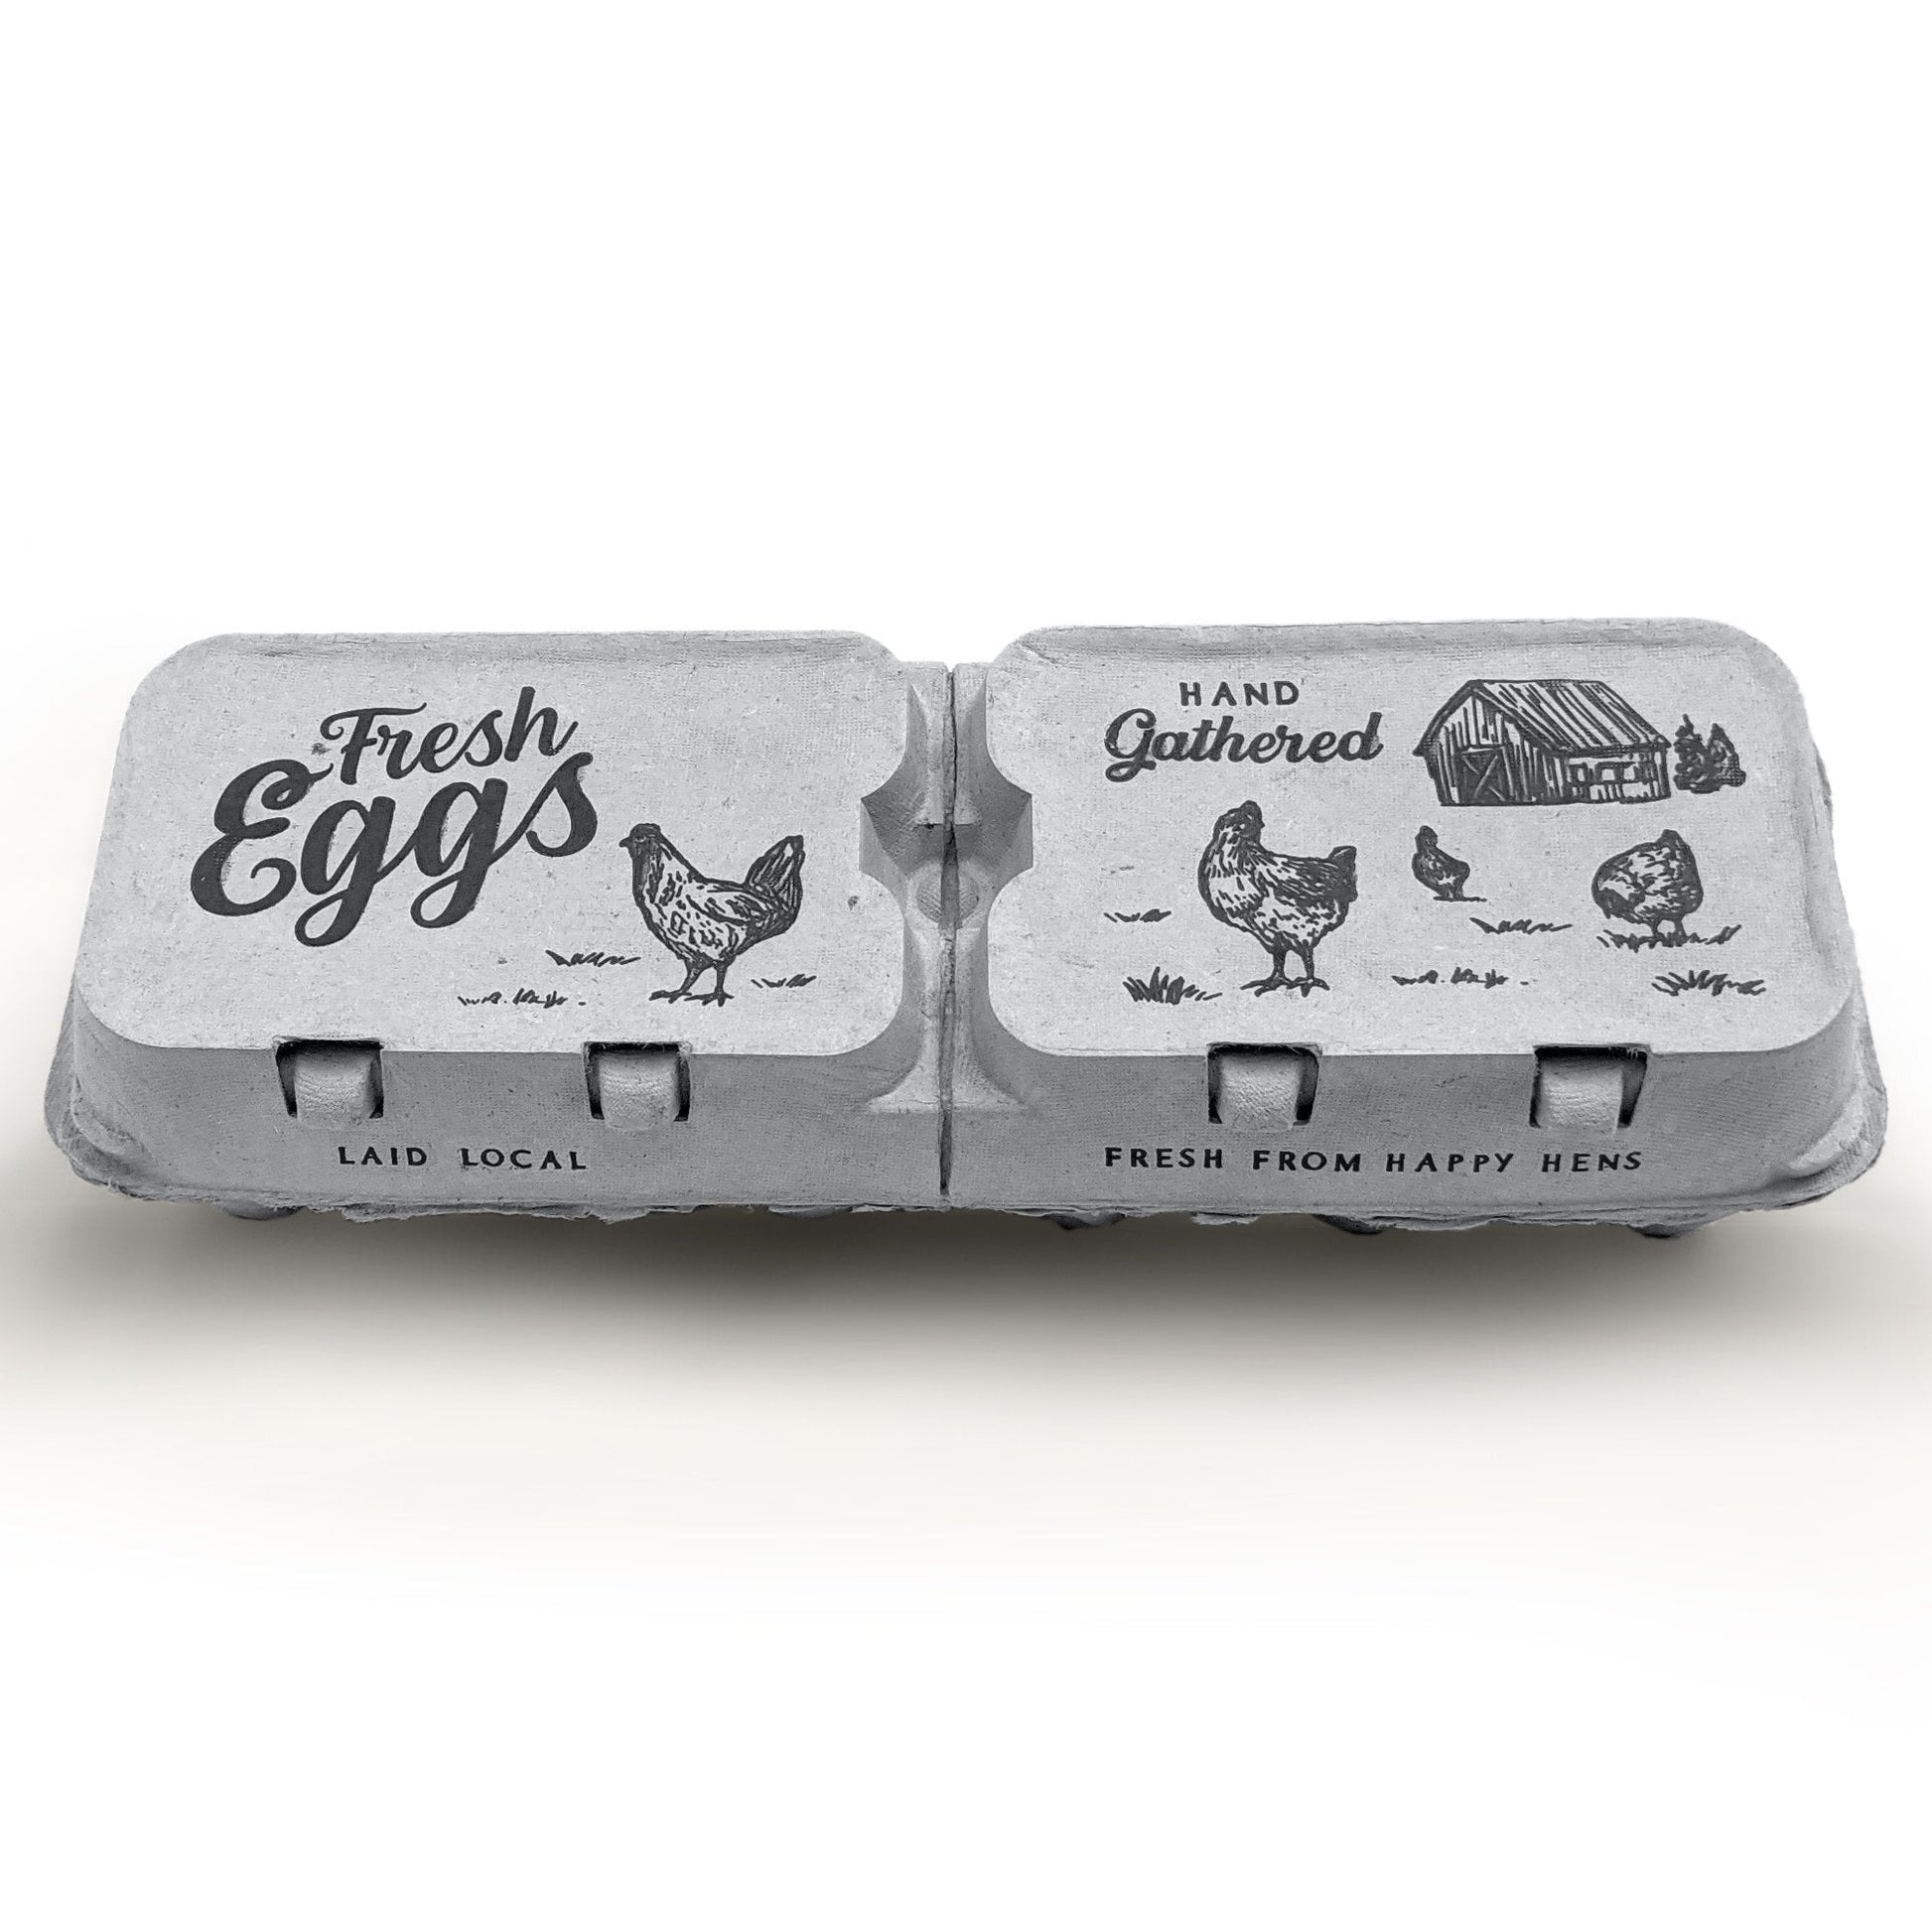 FVIEXE 40PCS Egg Cartons Cheap Bulk, 6 Count Egg Cartons for Half